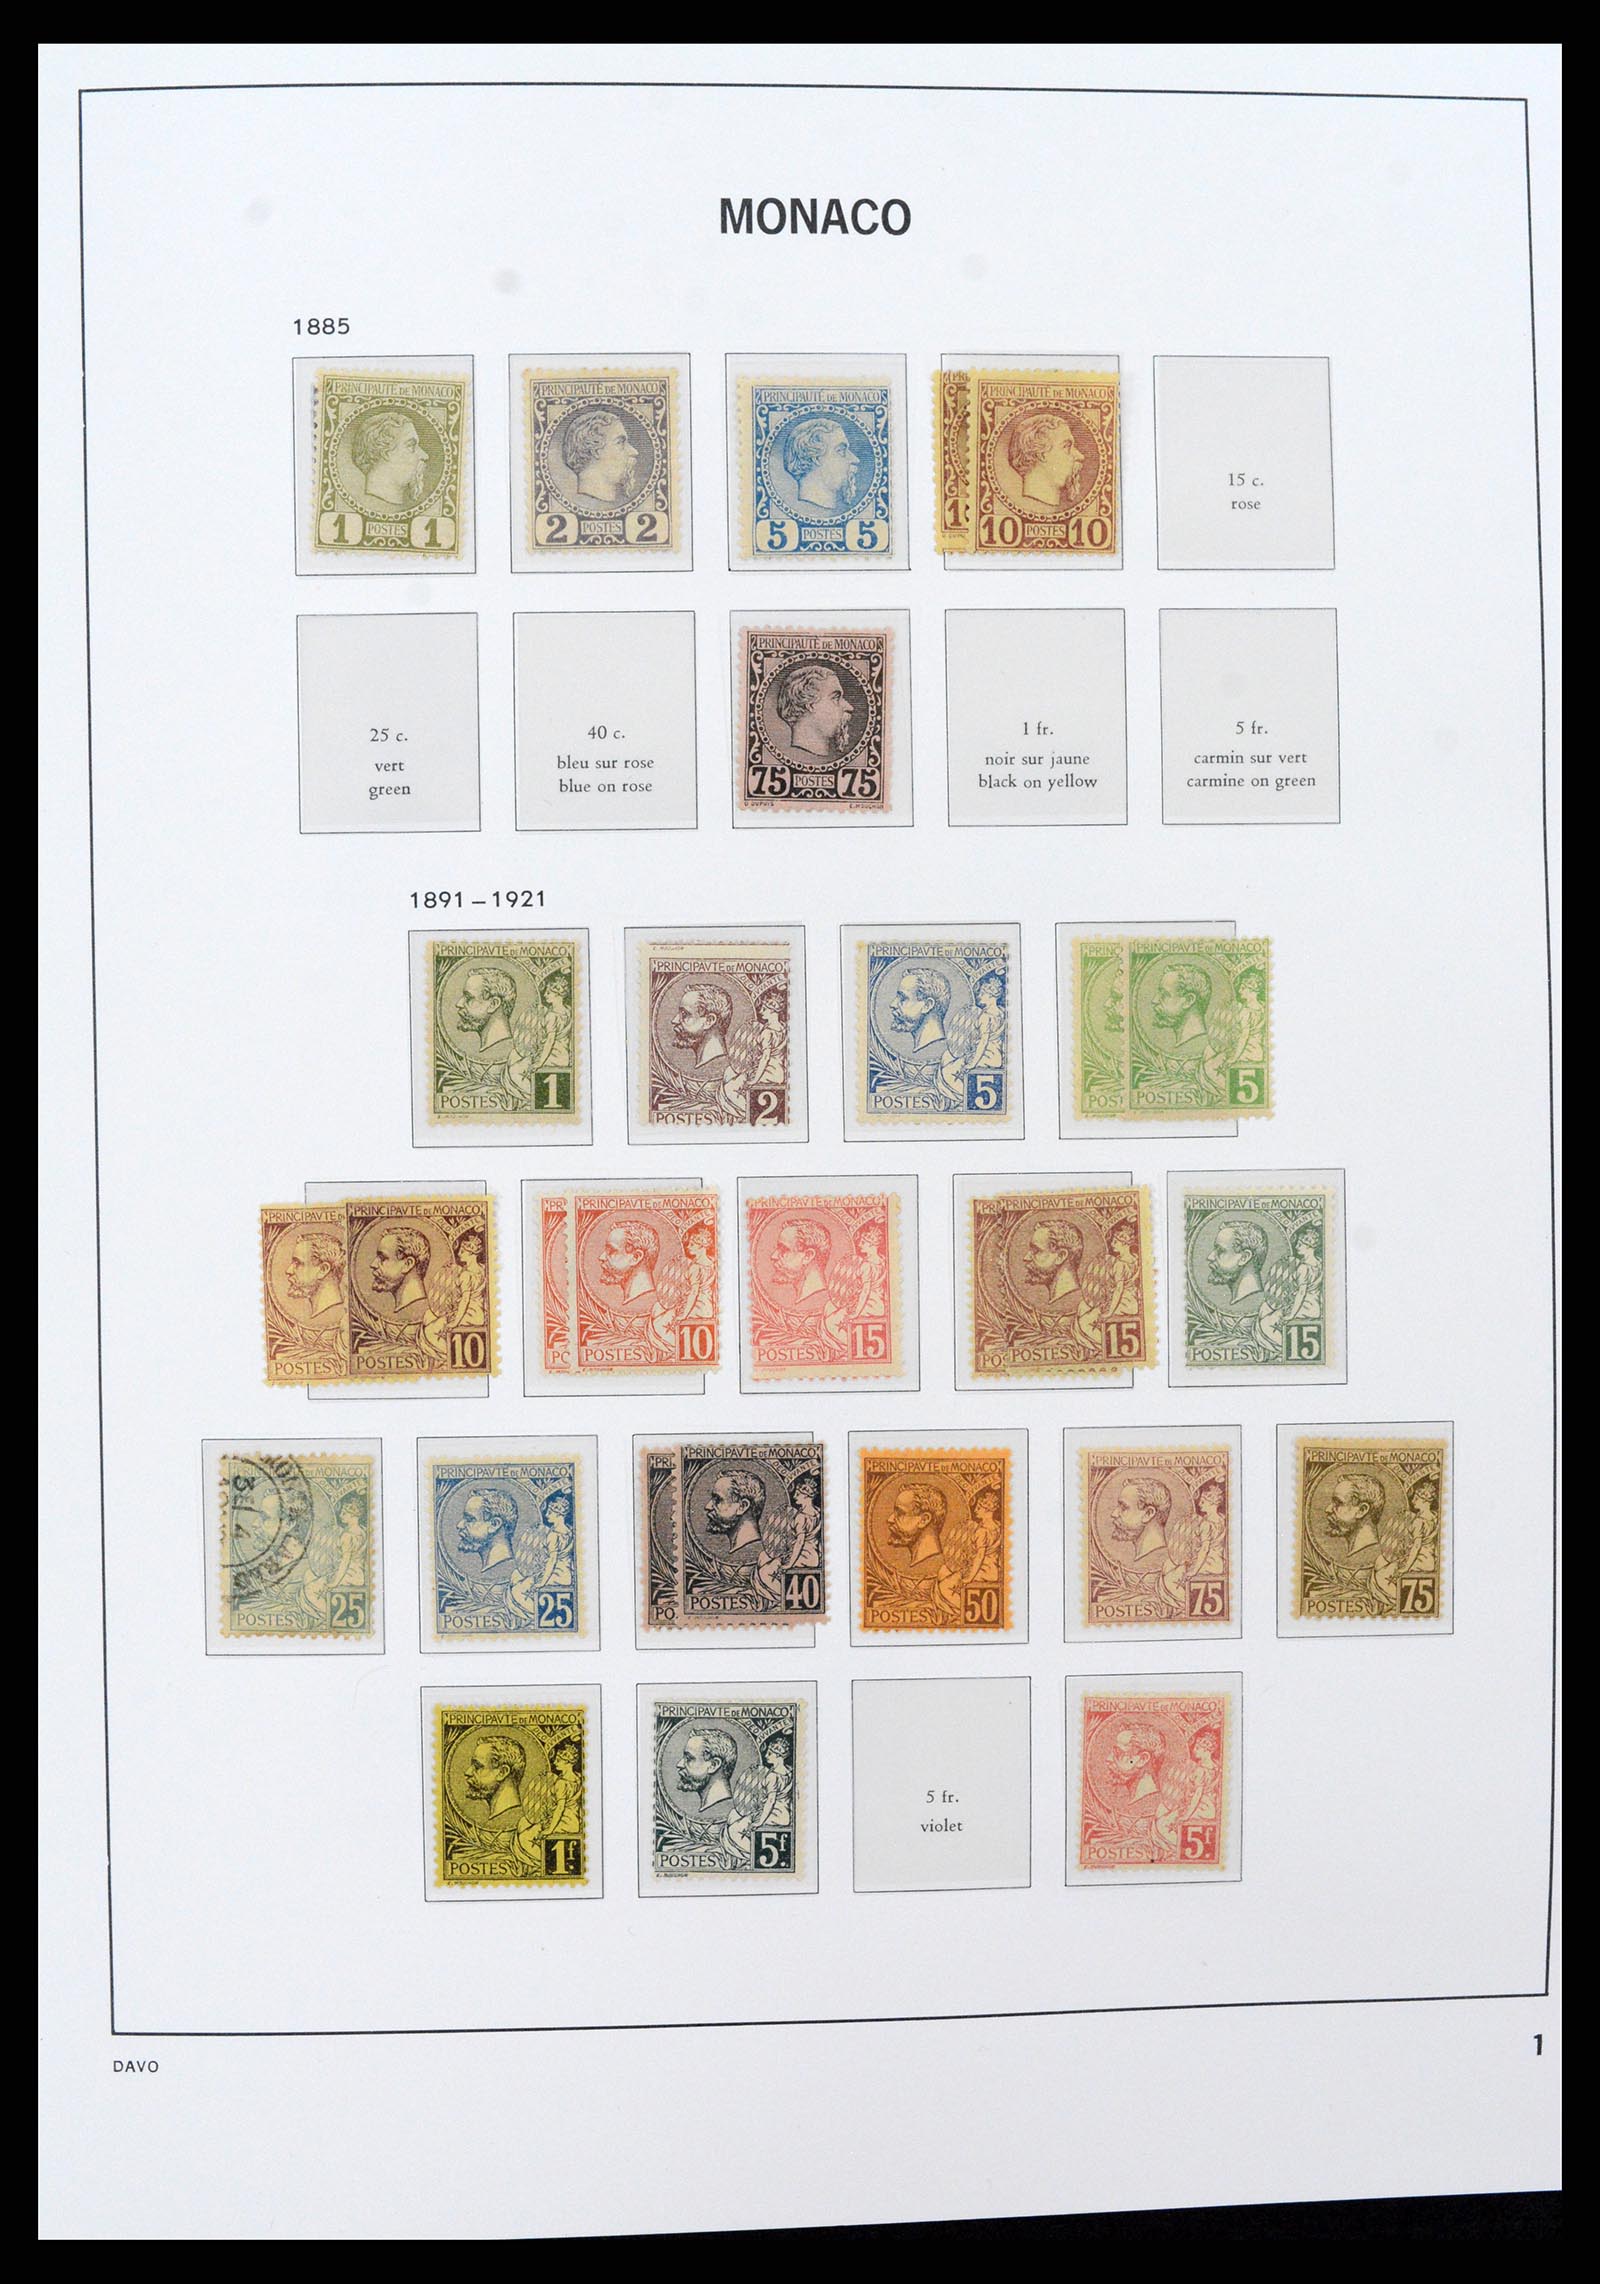 37279 001 - Stamp collection 37279 Monaco 1885-1969.